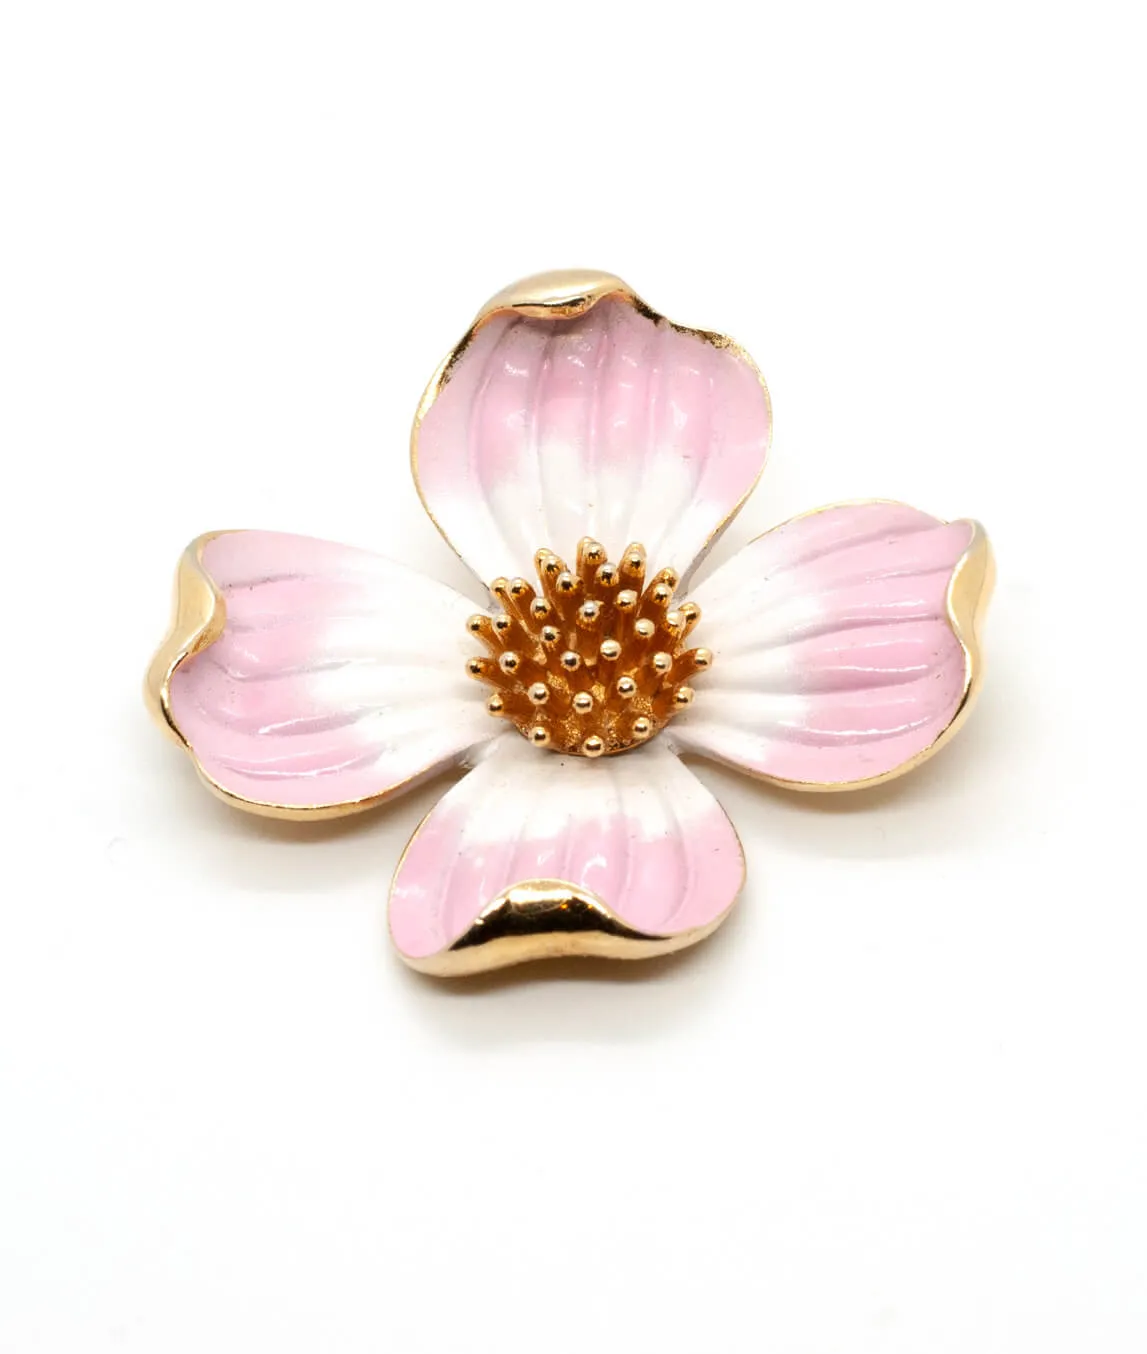 Crown Trifari dogwood flower brooch in pink